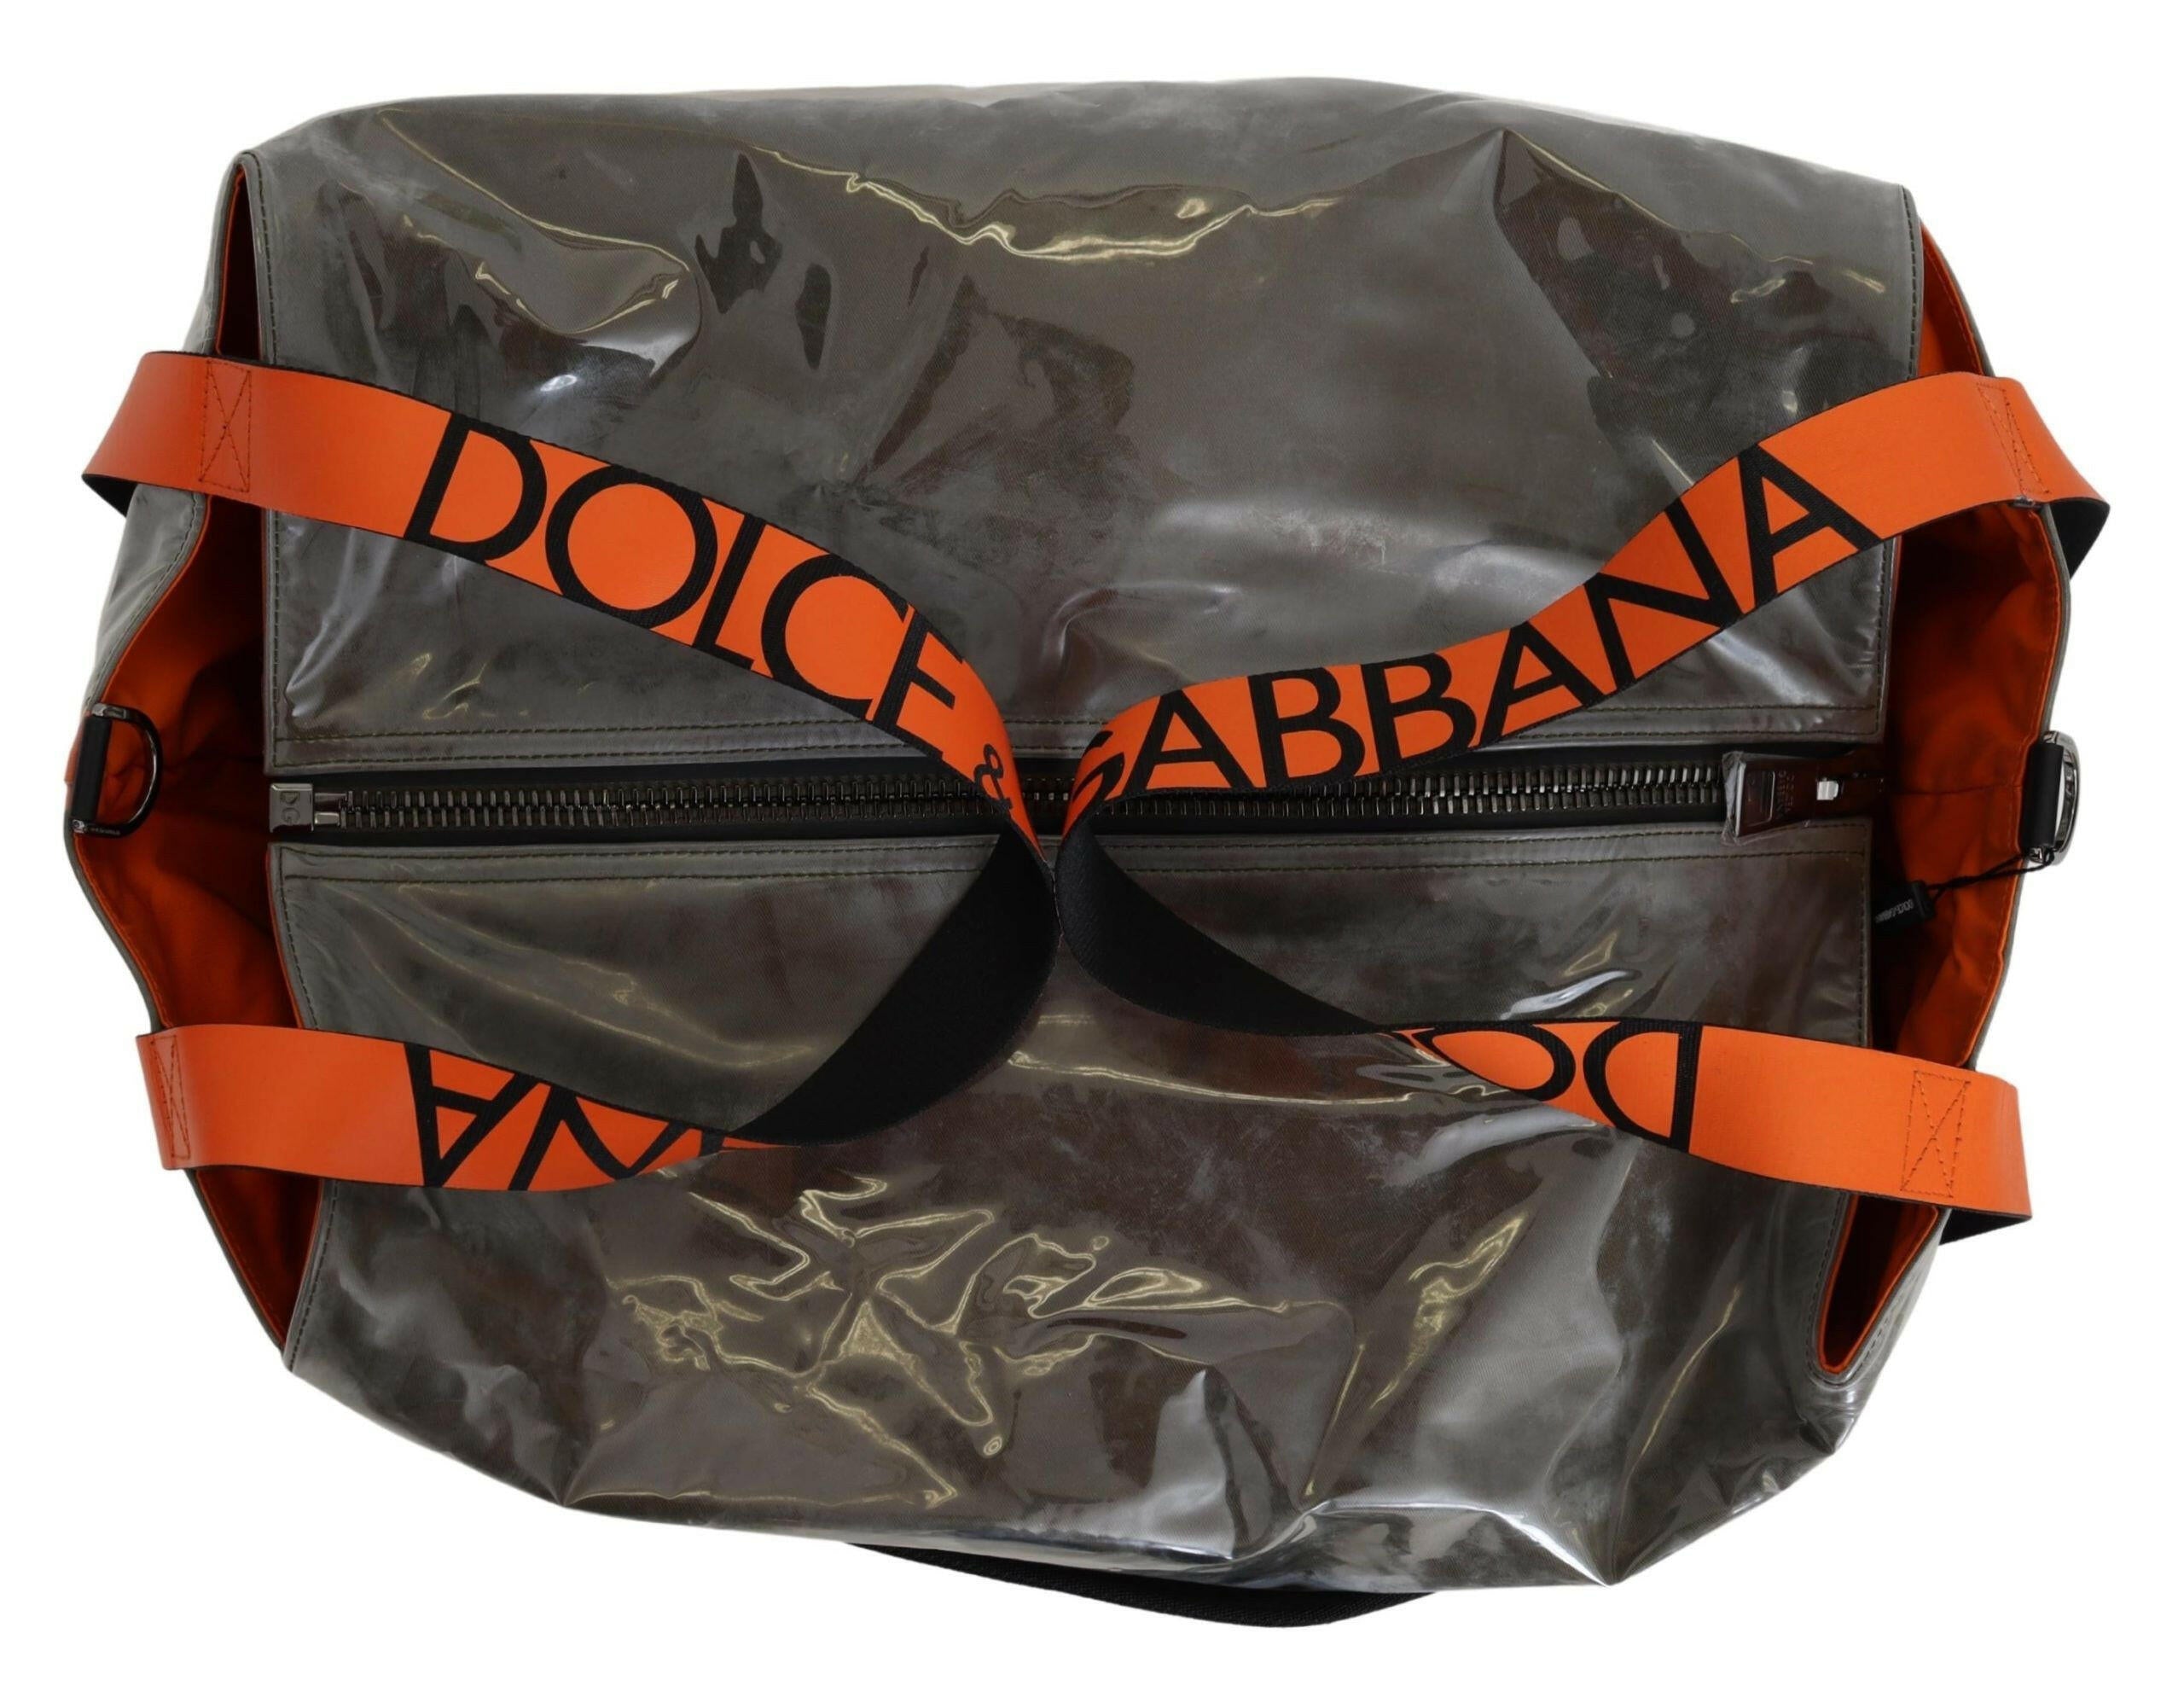 Dolce & Gabbana Cotton Men Large Fabric Green Shopping Tote Bag - GENUINE AUTHENTIC BRAND LLC  